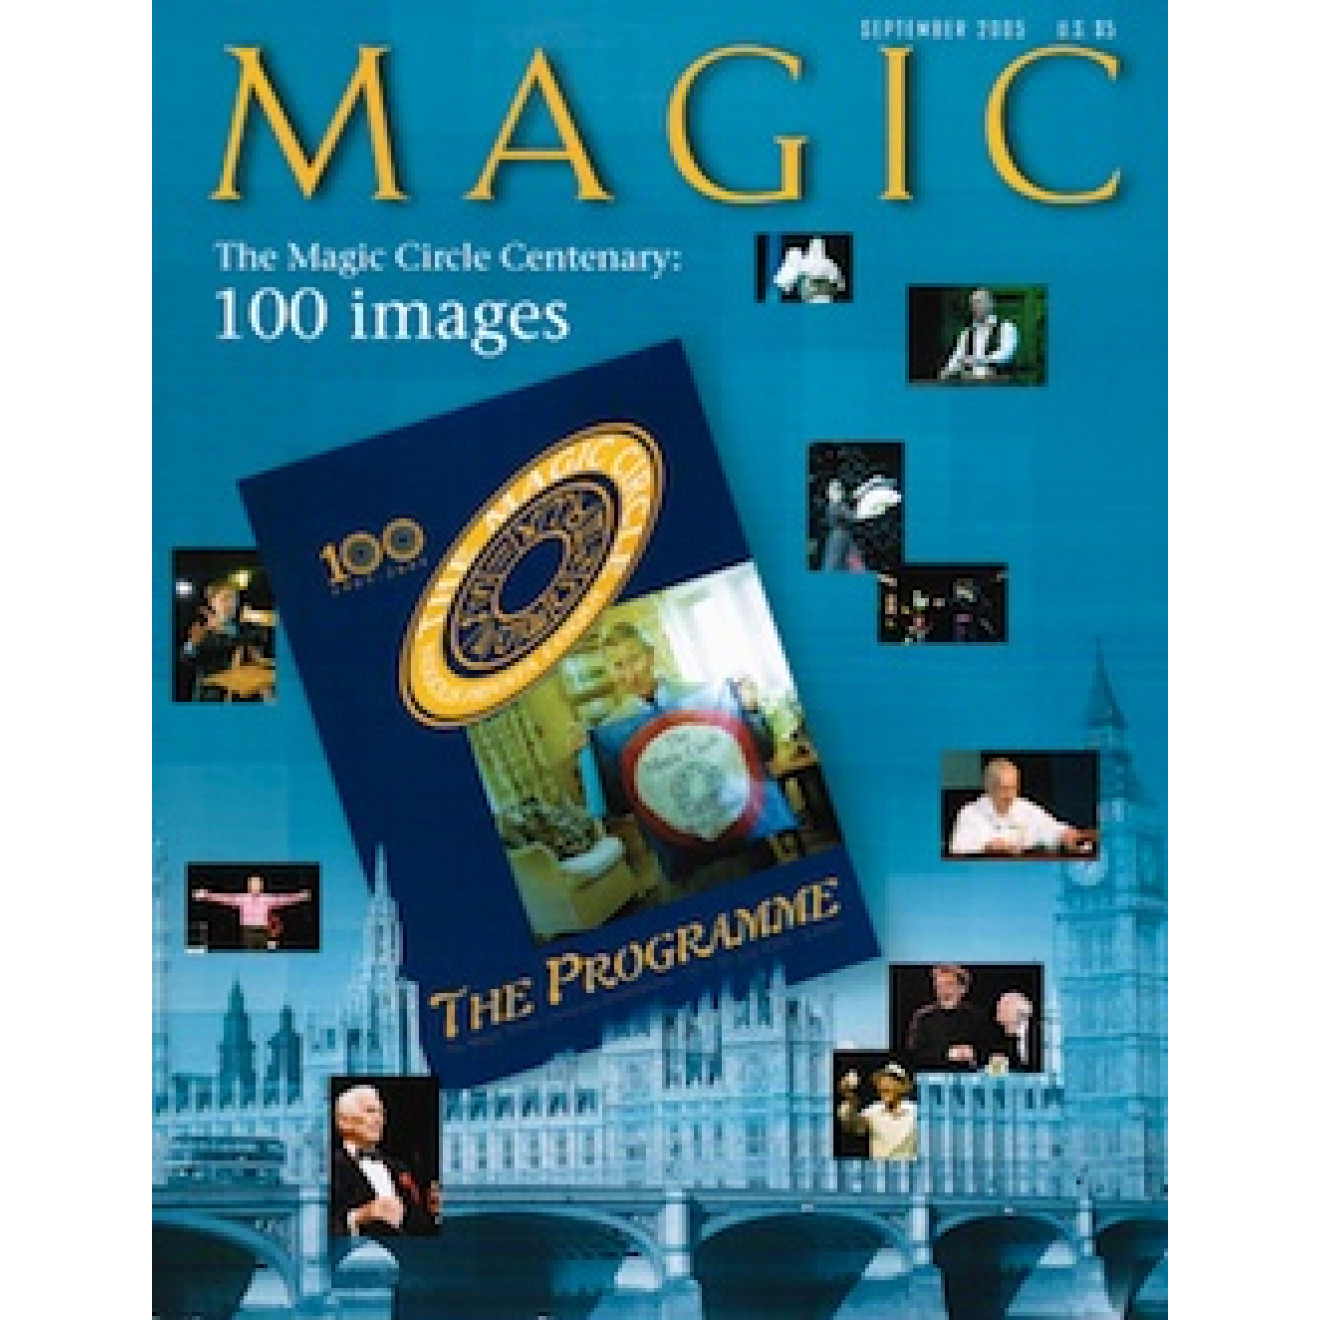 MAGIC, Vol. 15 (September 2005 bis August 2006)